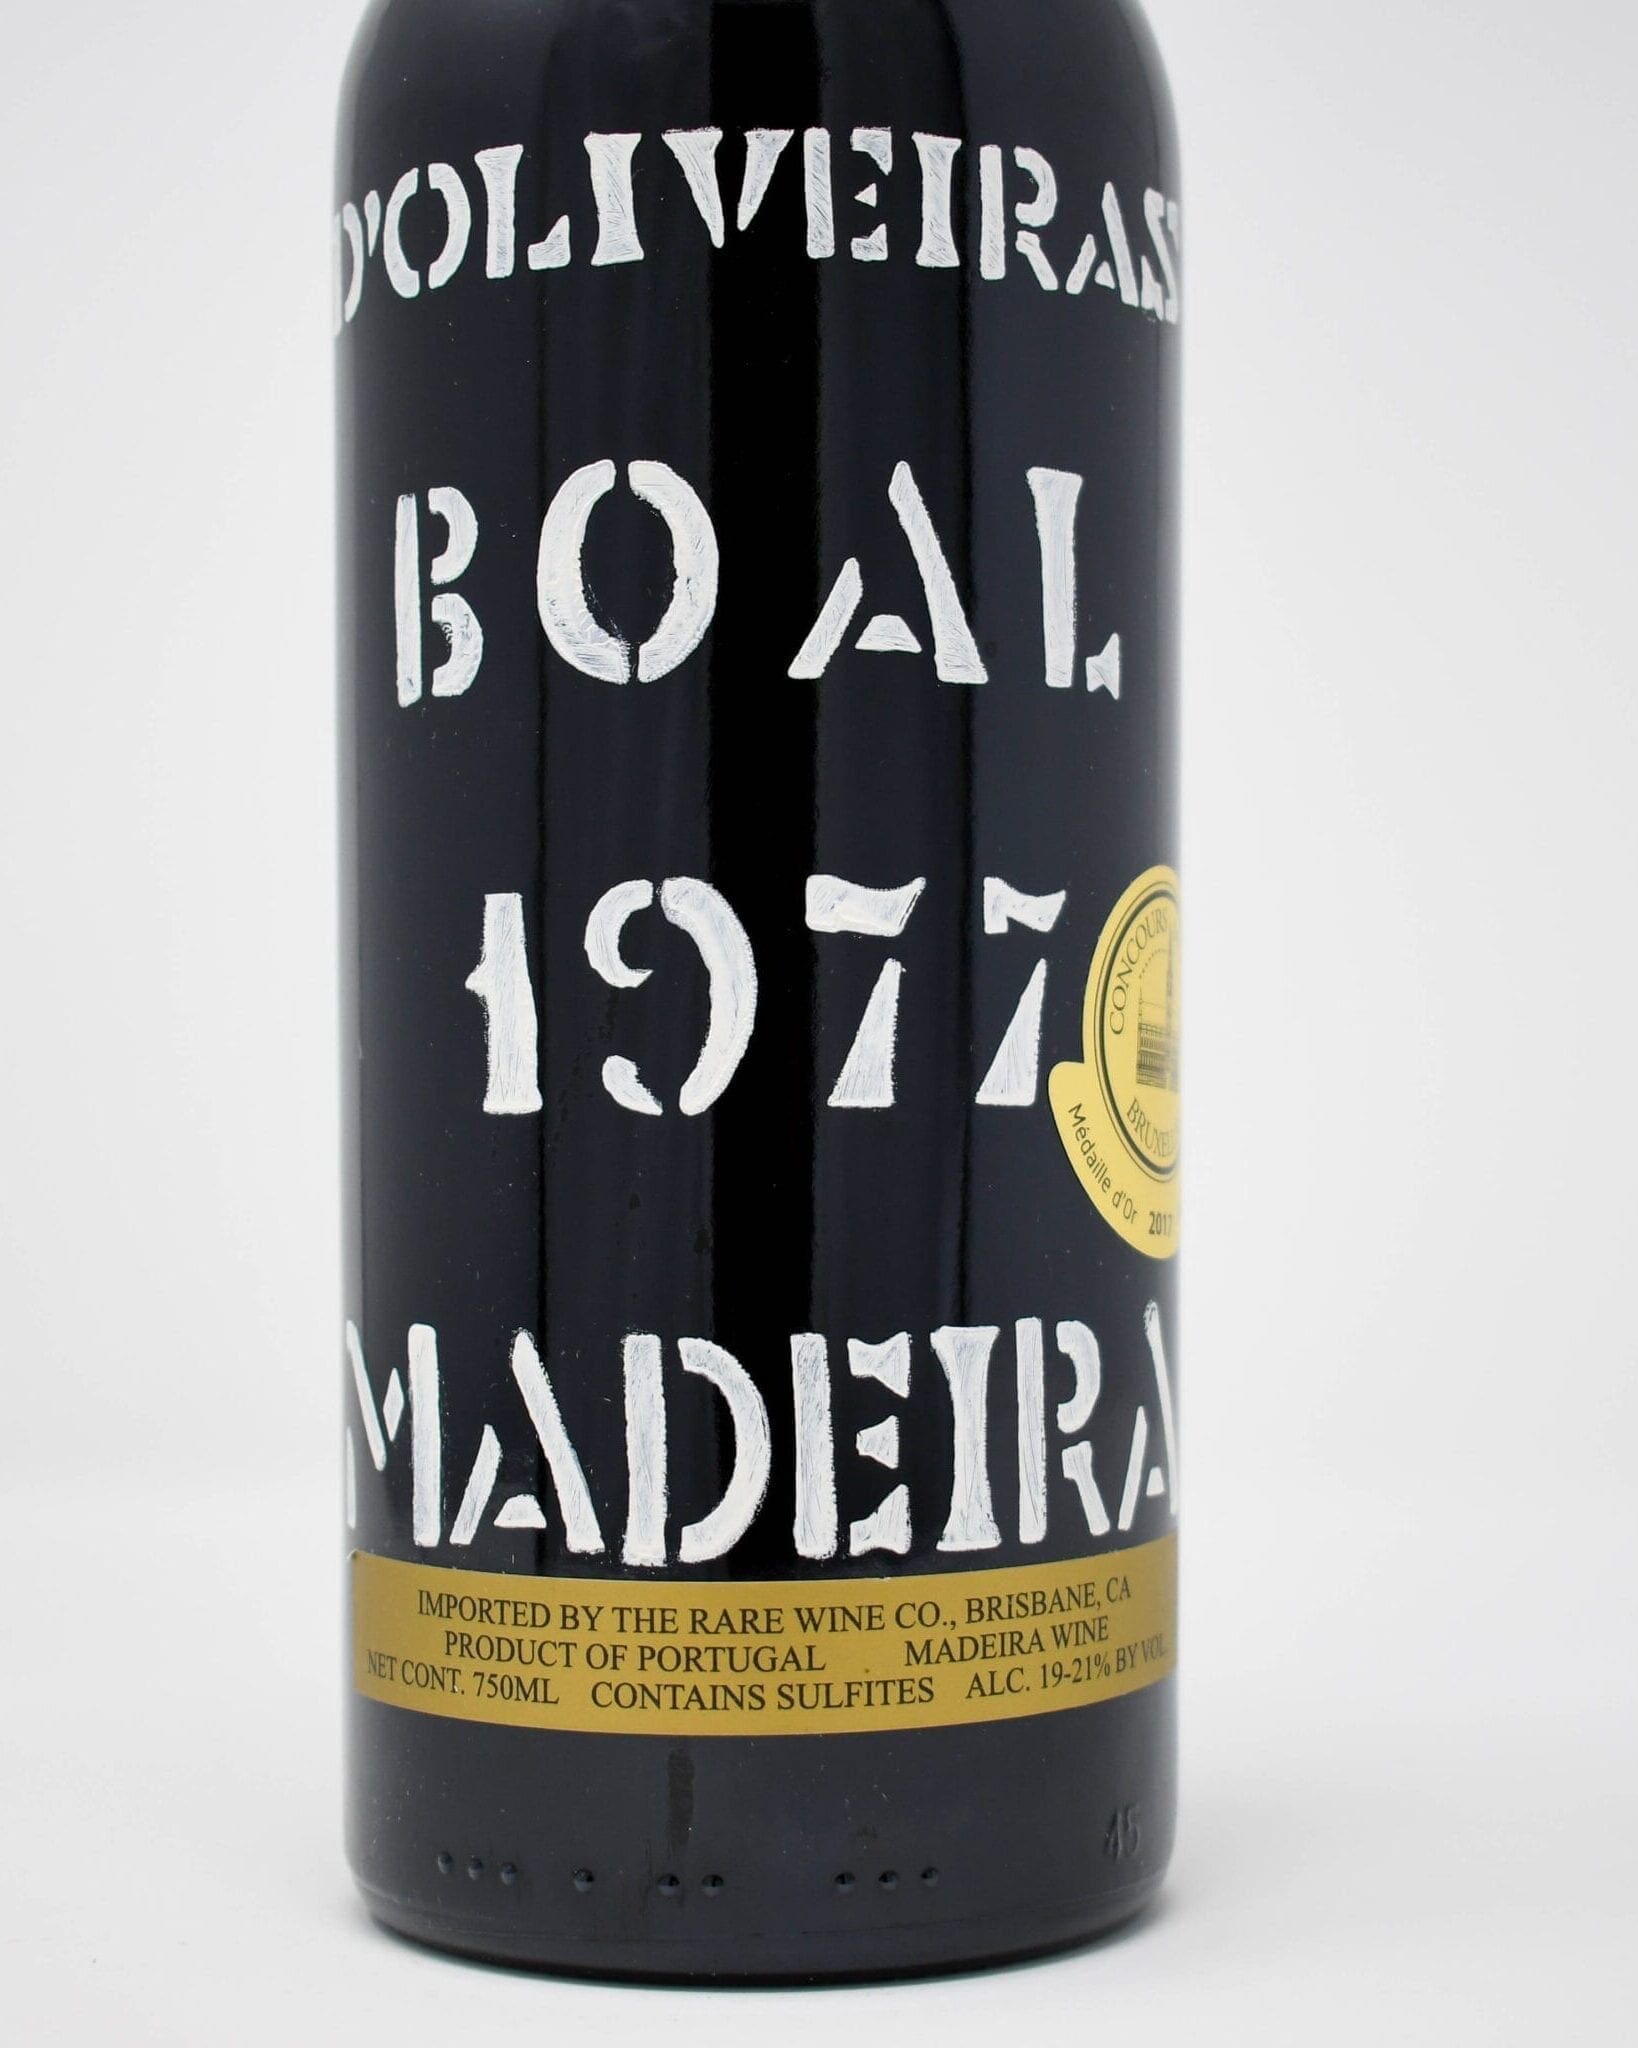 D'Oliveiras, Boal, Madeira 1977